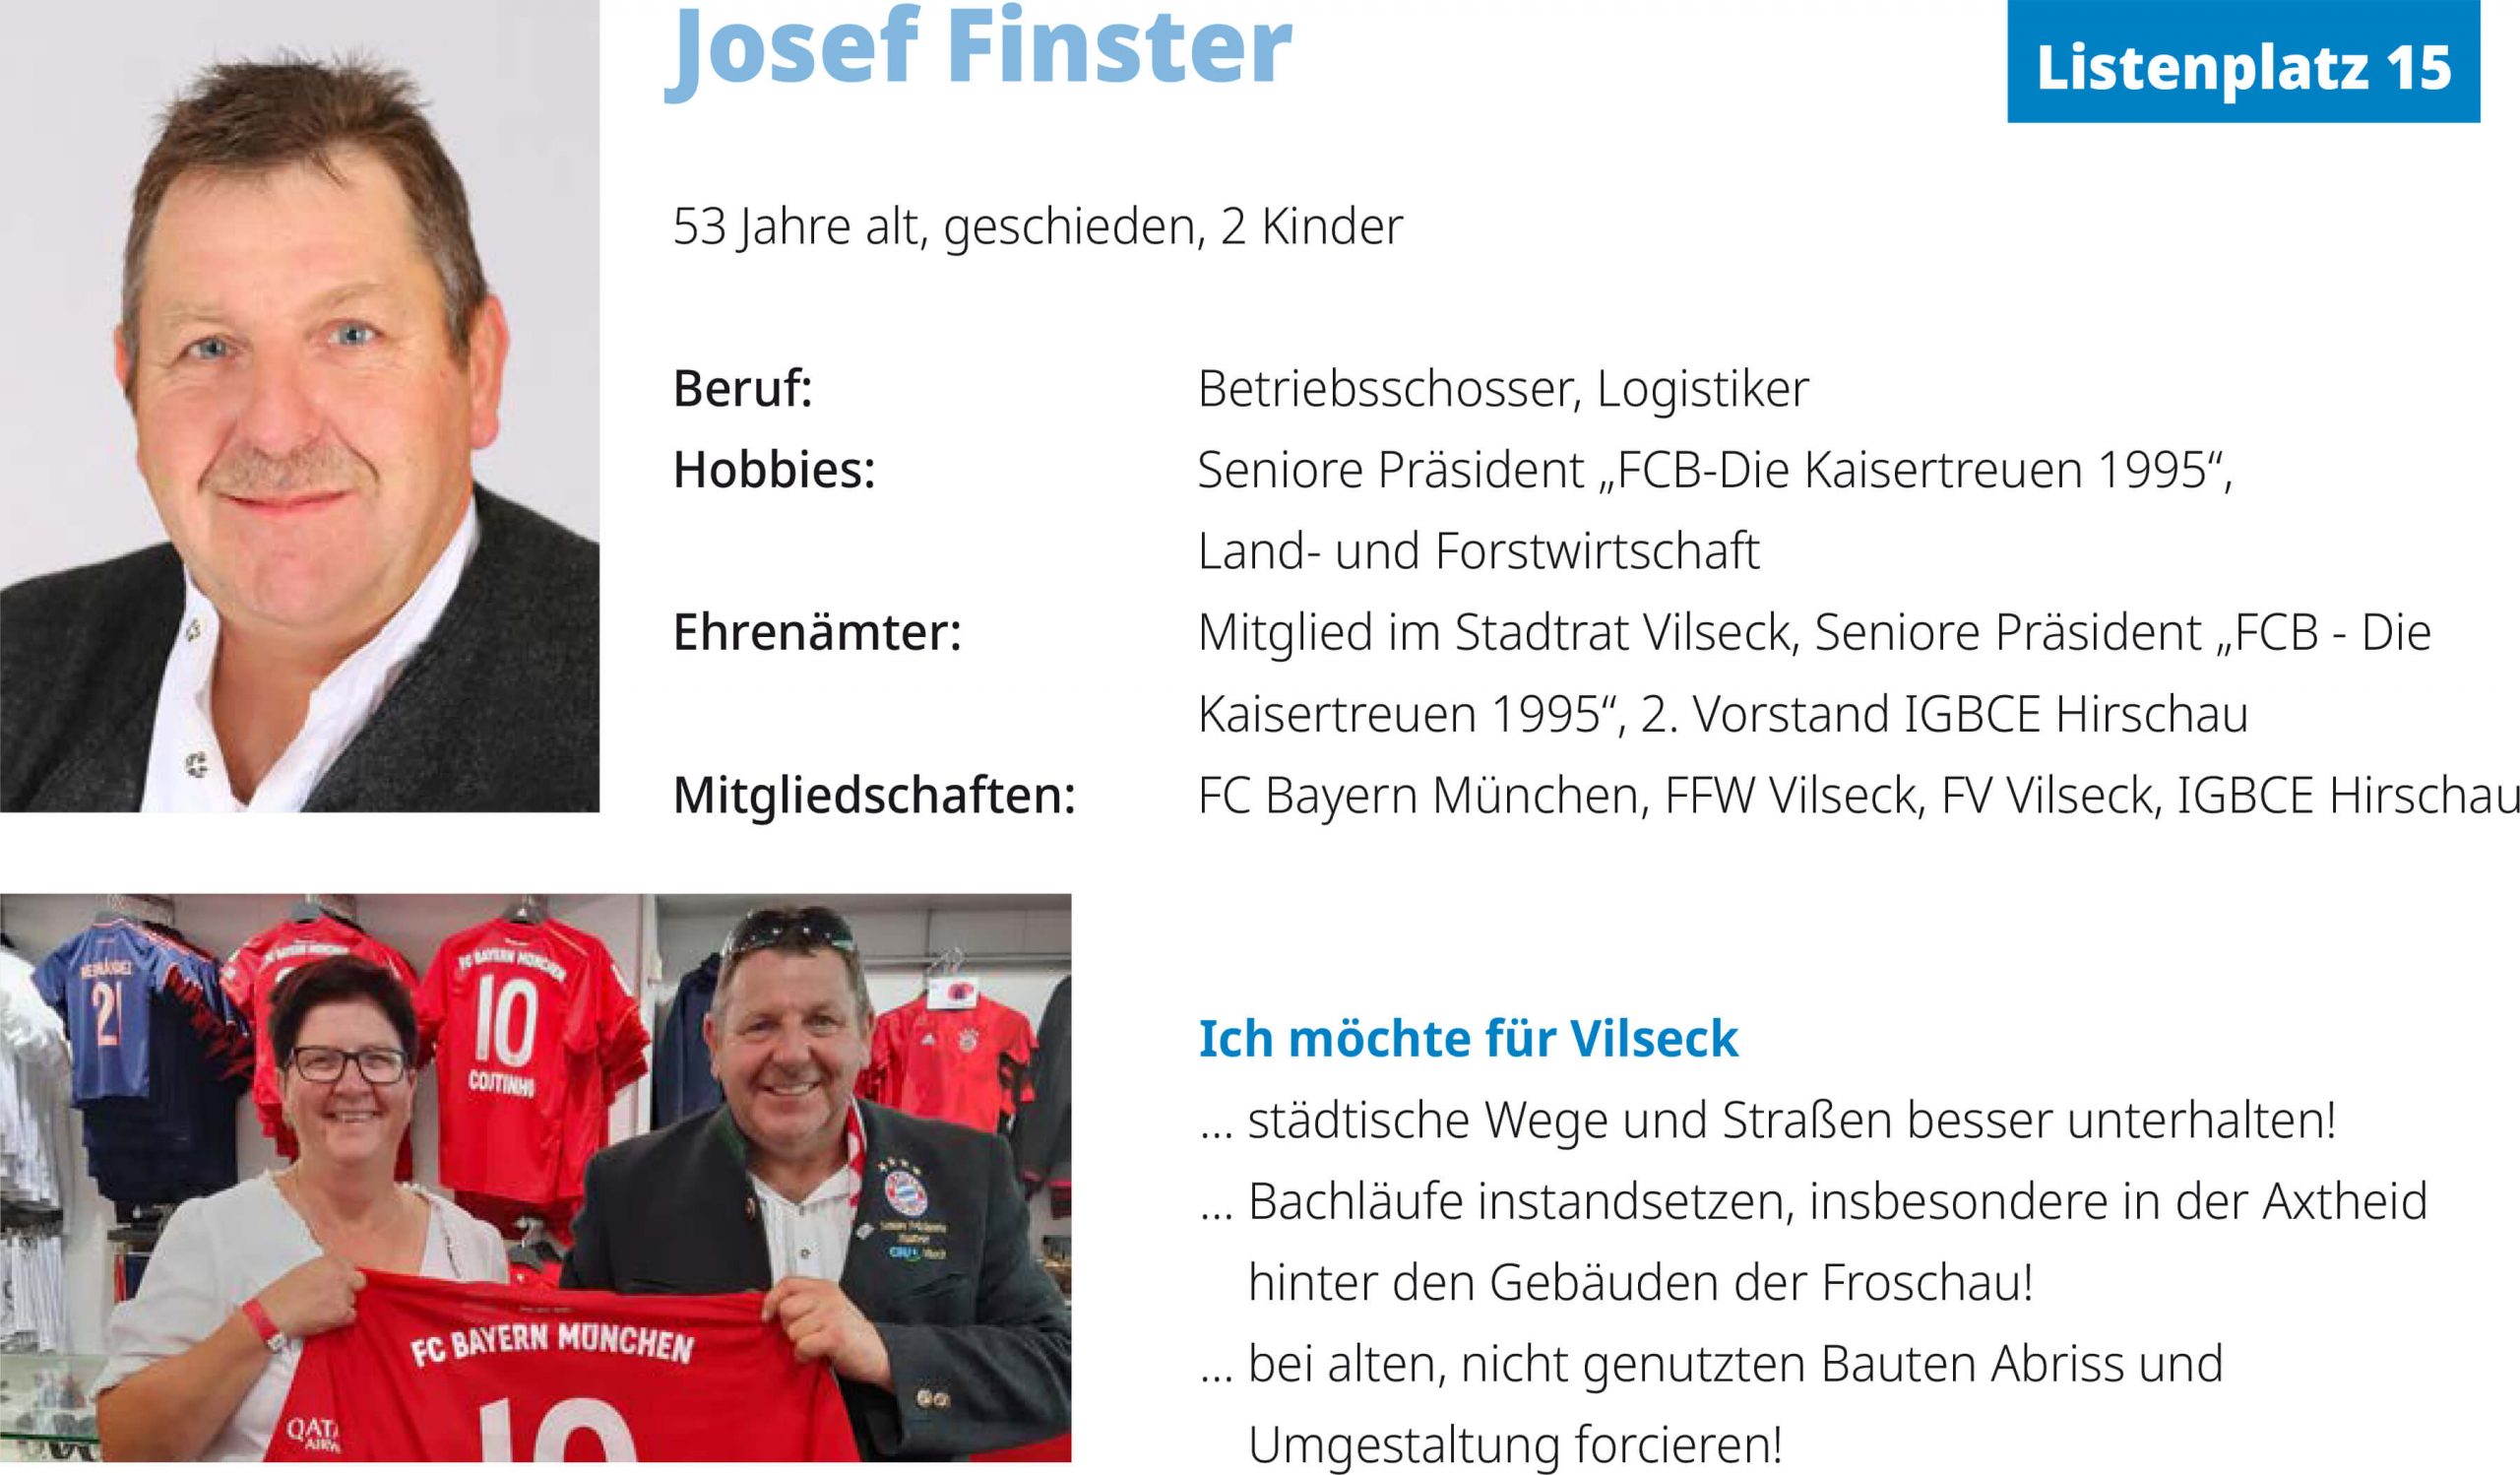 Josef Finster